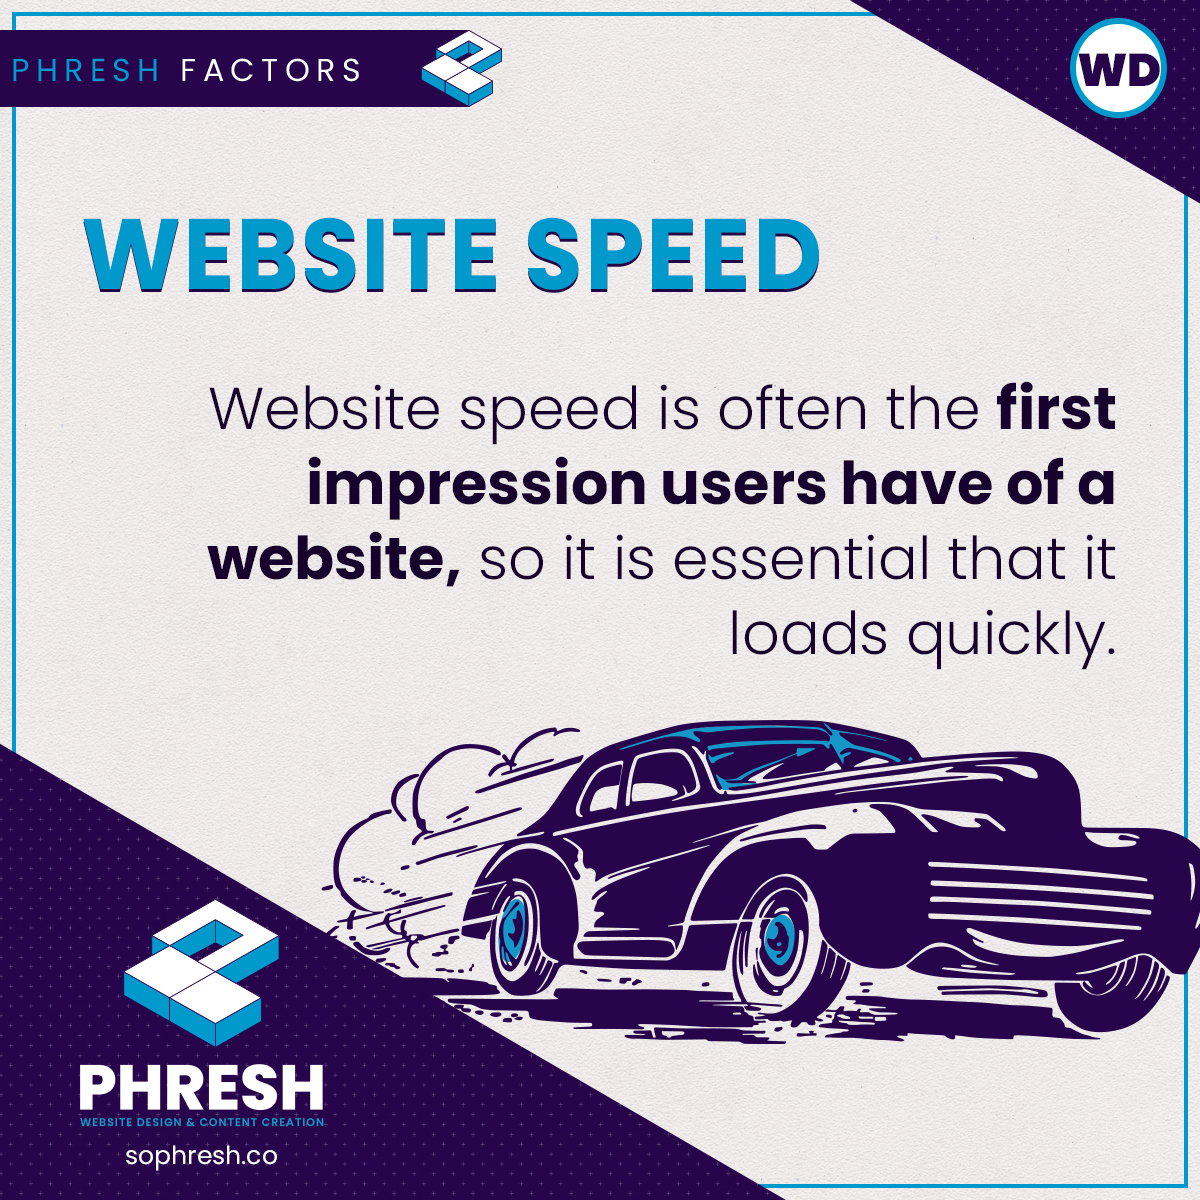 WD Website Speed